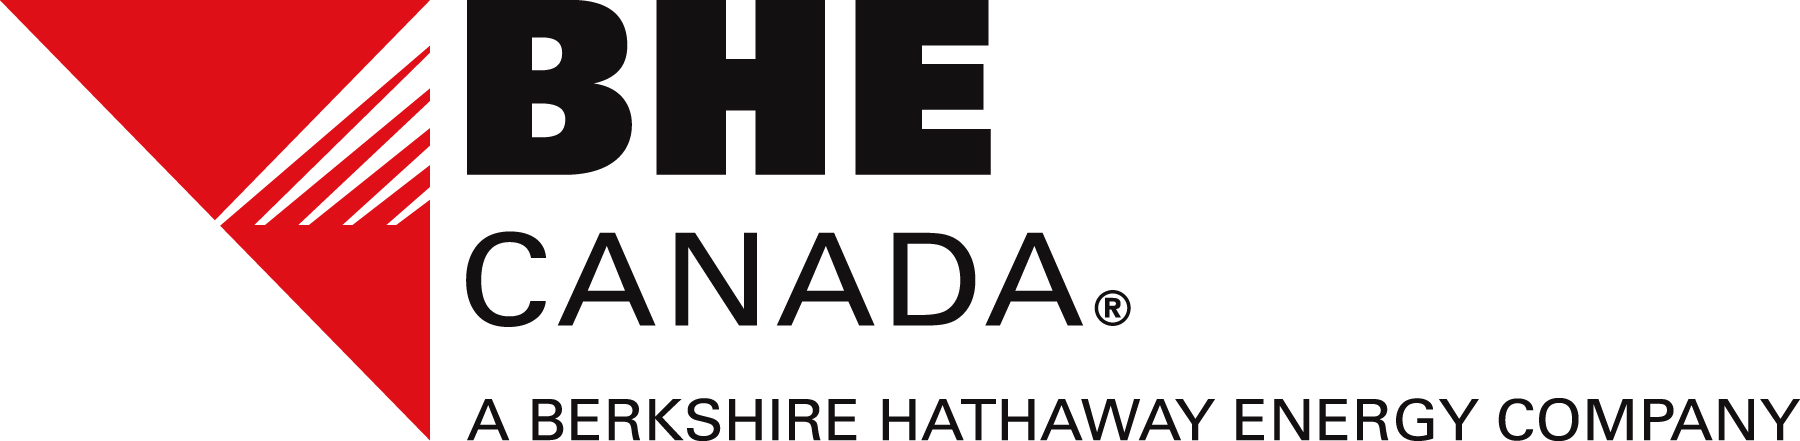 BHE Canada logo